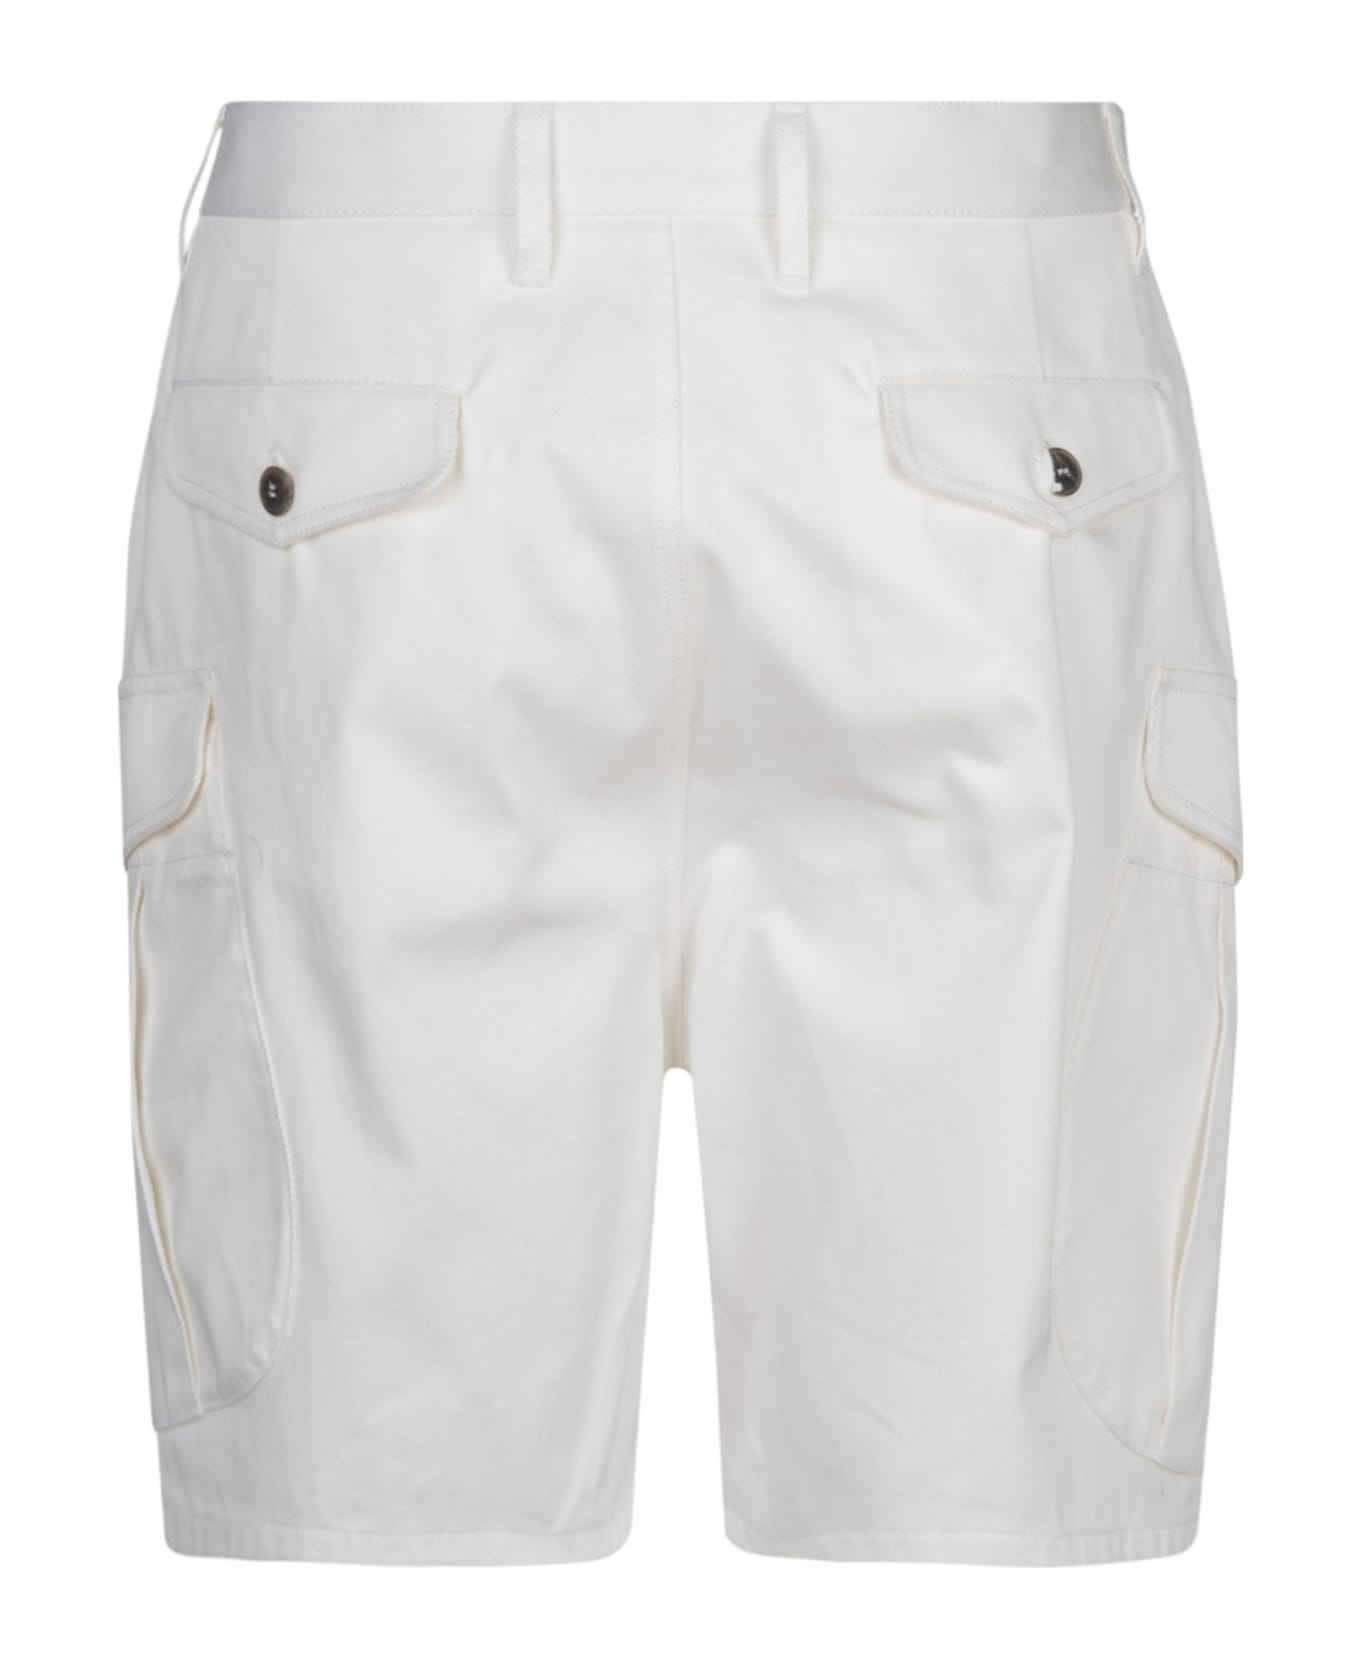 Giorgio Armani High Buttoned Shorts - Bn